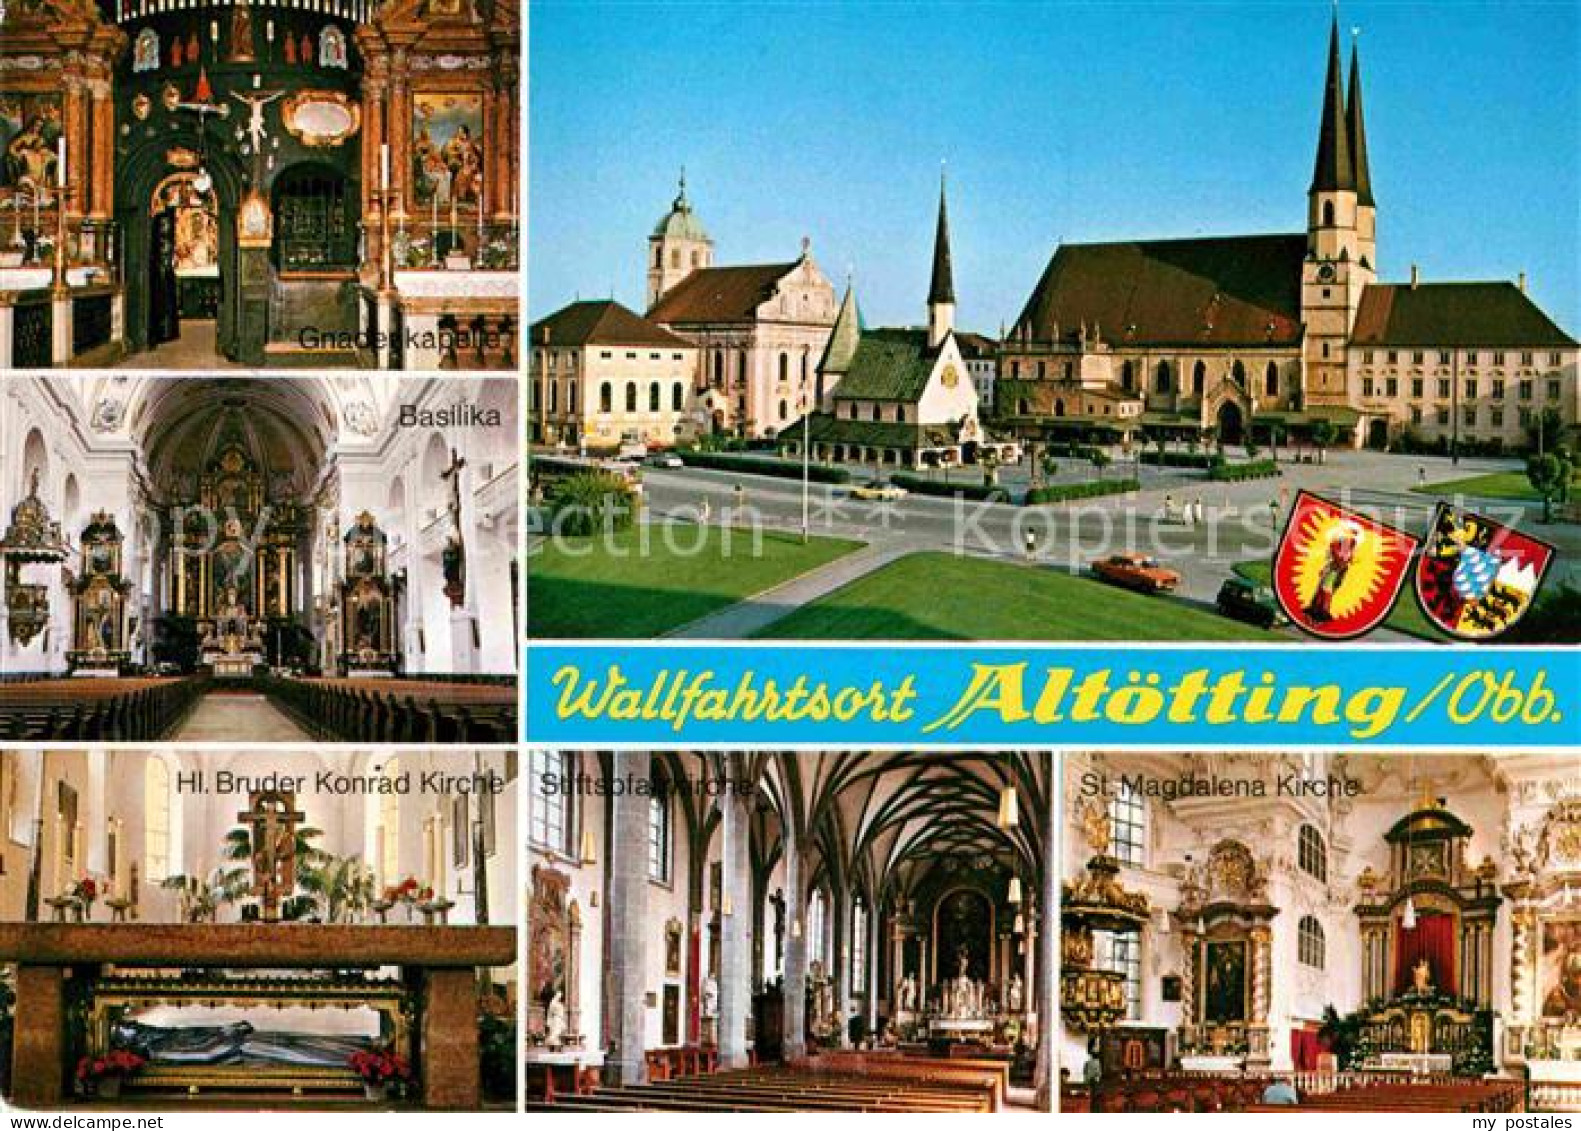 72692299 Altoetting Gnadenkapelle Basilika Hl Bruder Konrad Kirche Stiftspfarrki - Altötting